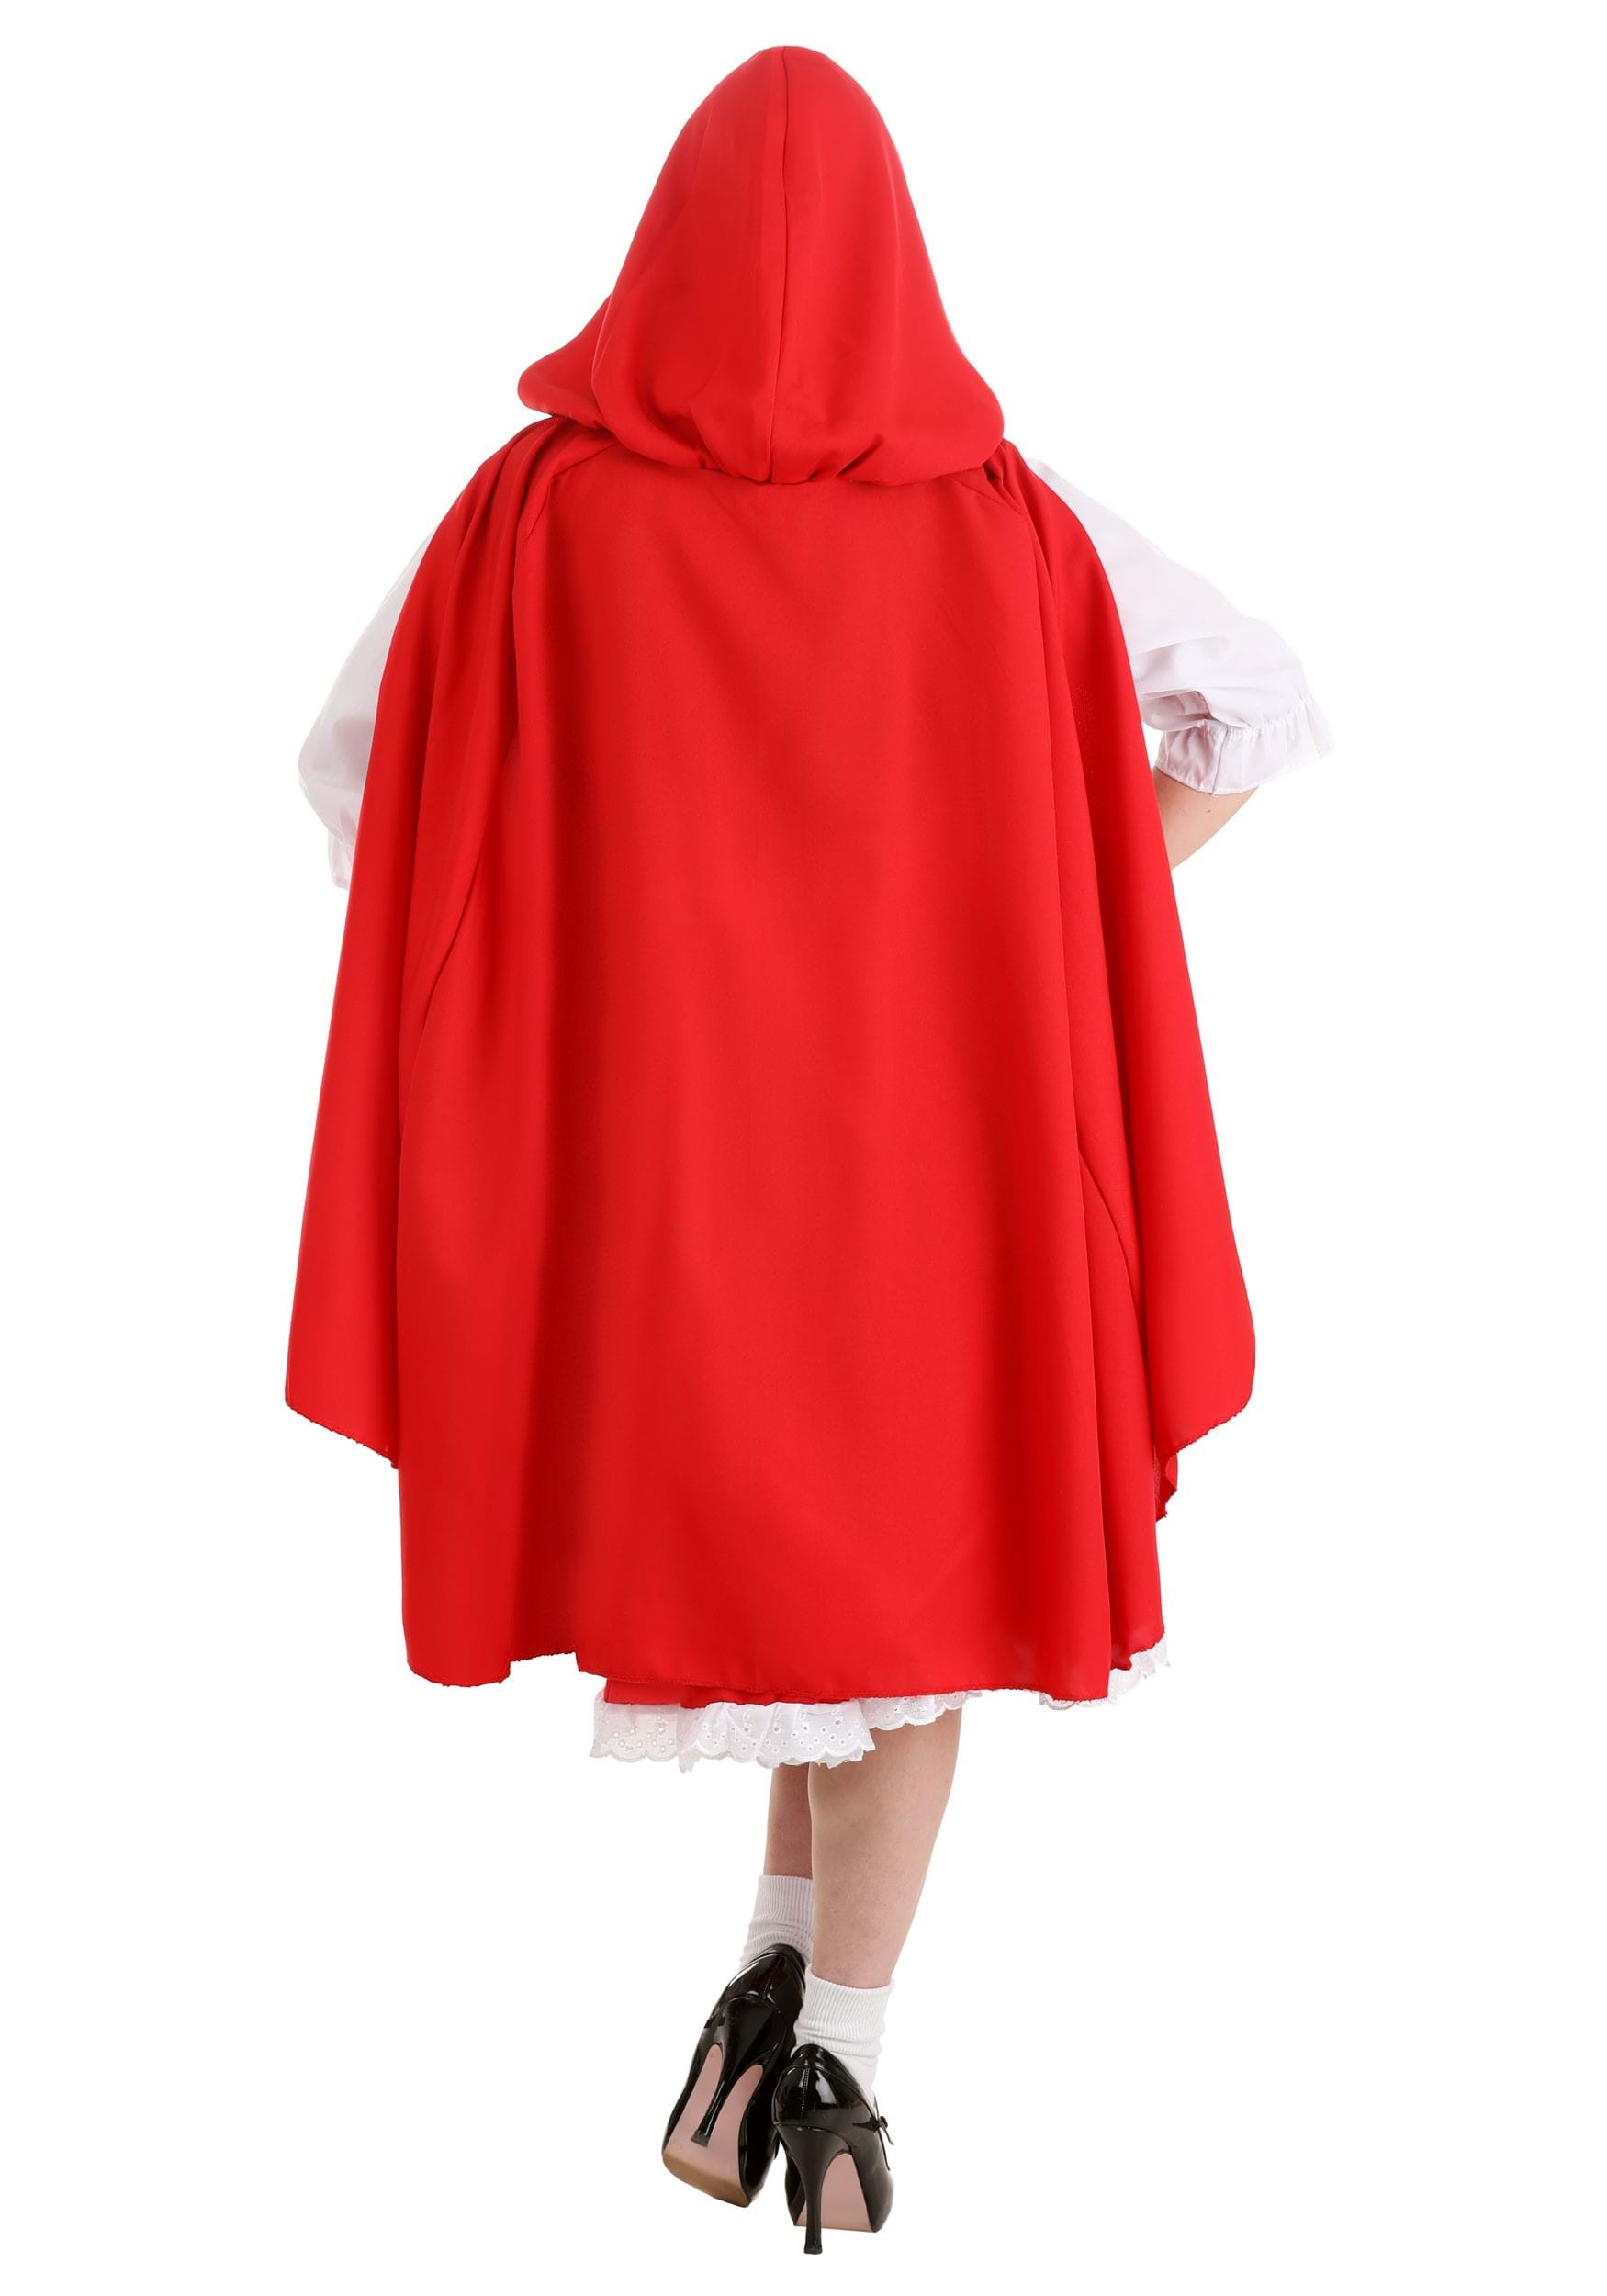 Women's Riding Hood Costume